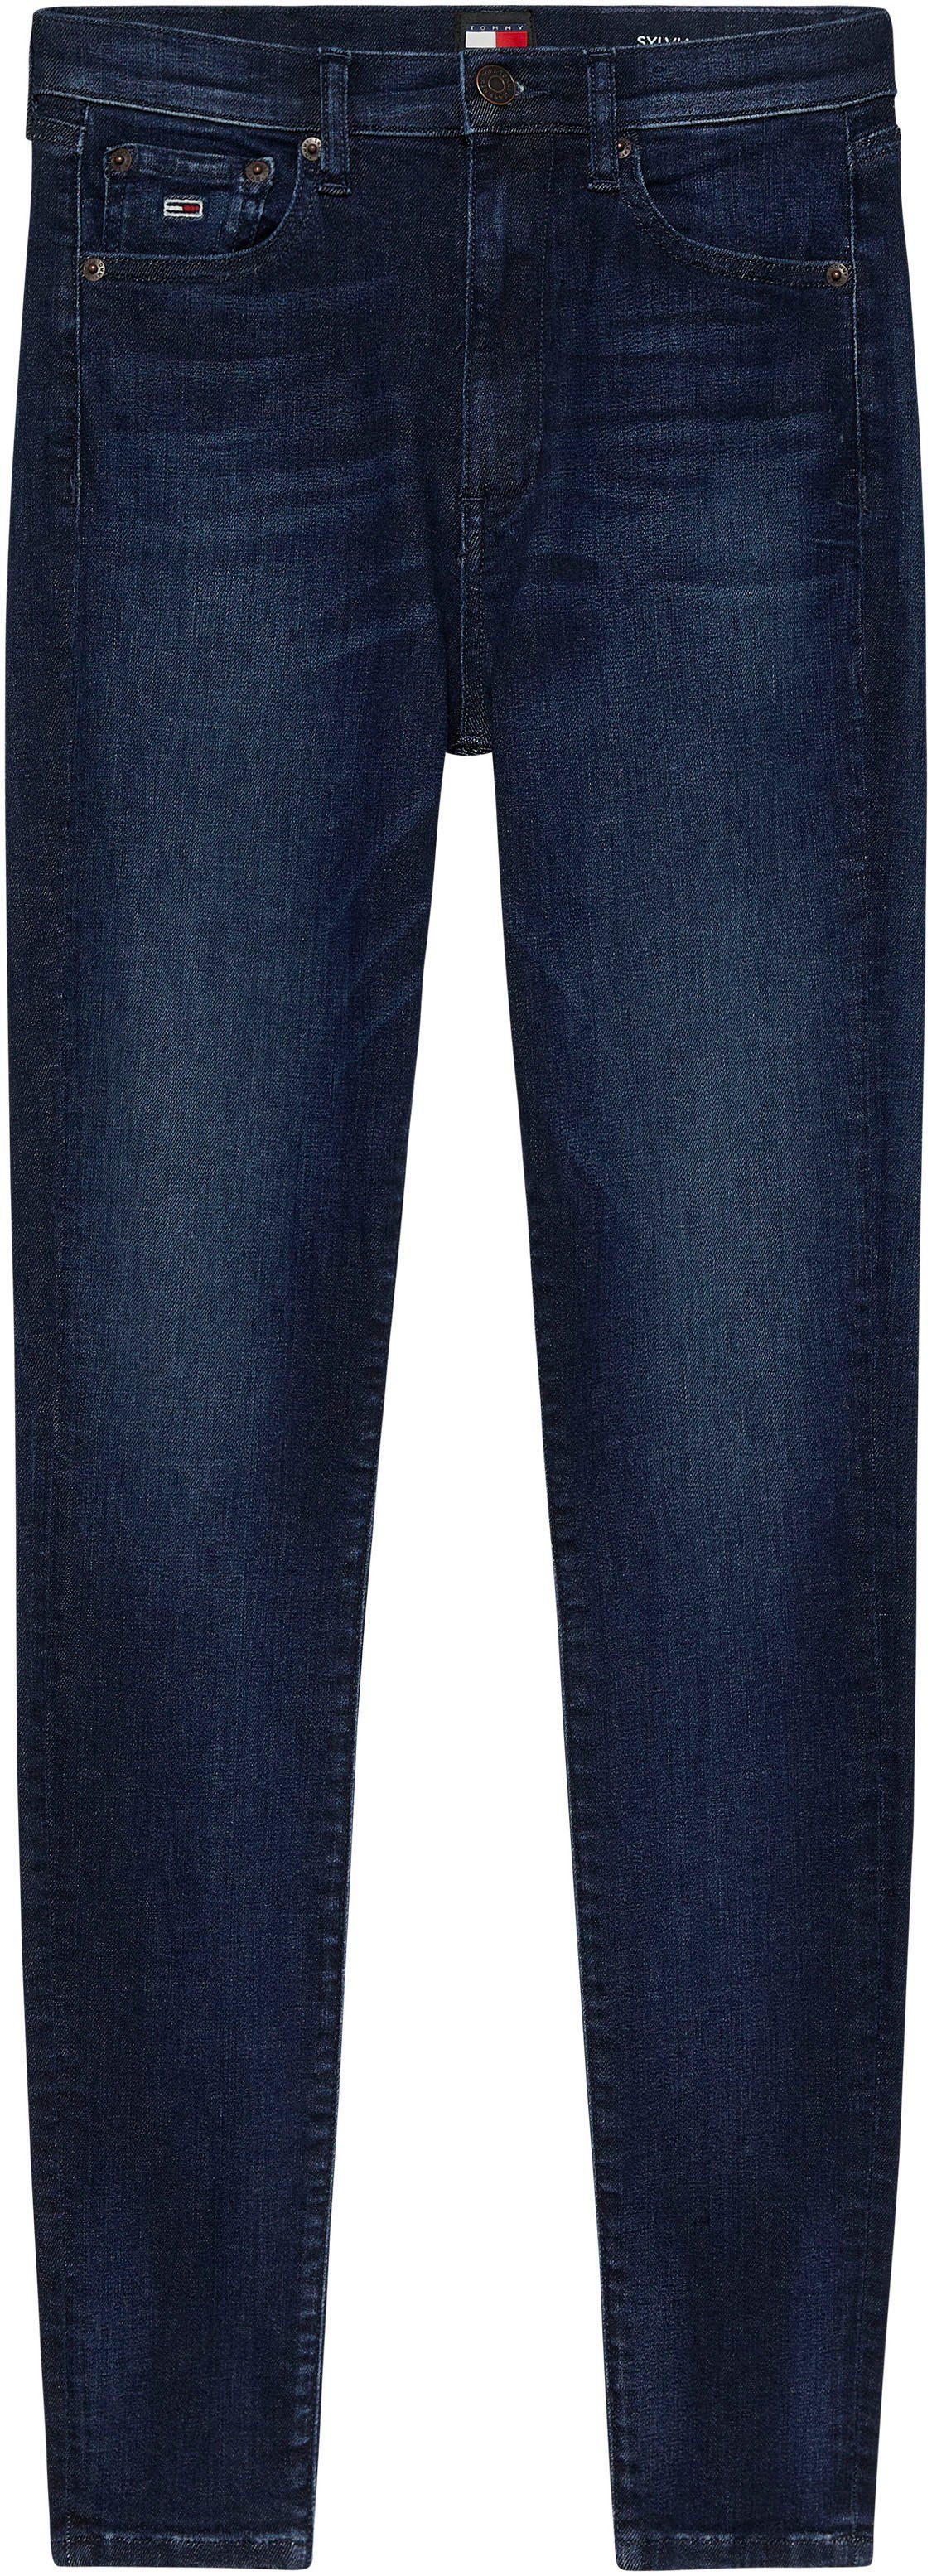 Sylvia Jeans Jeans Dark Ledermarkenlabel mit Bequeme Denim1 Tommy